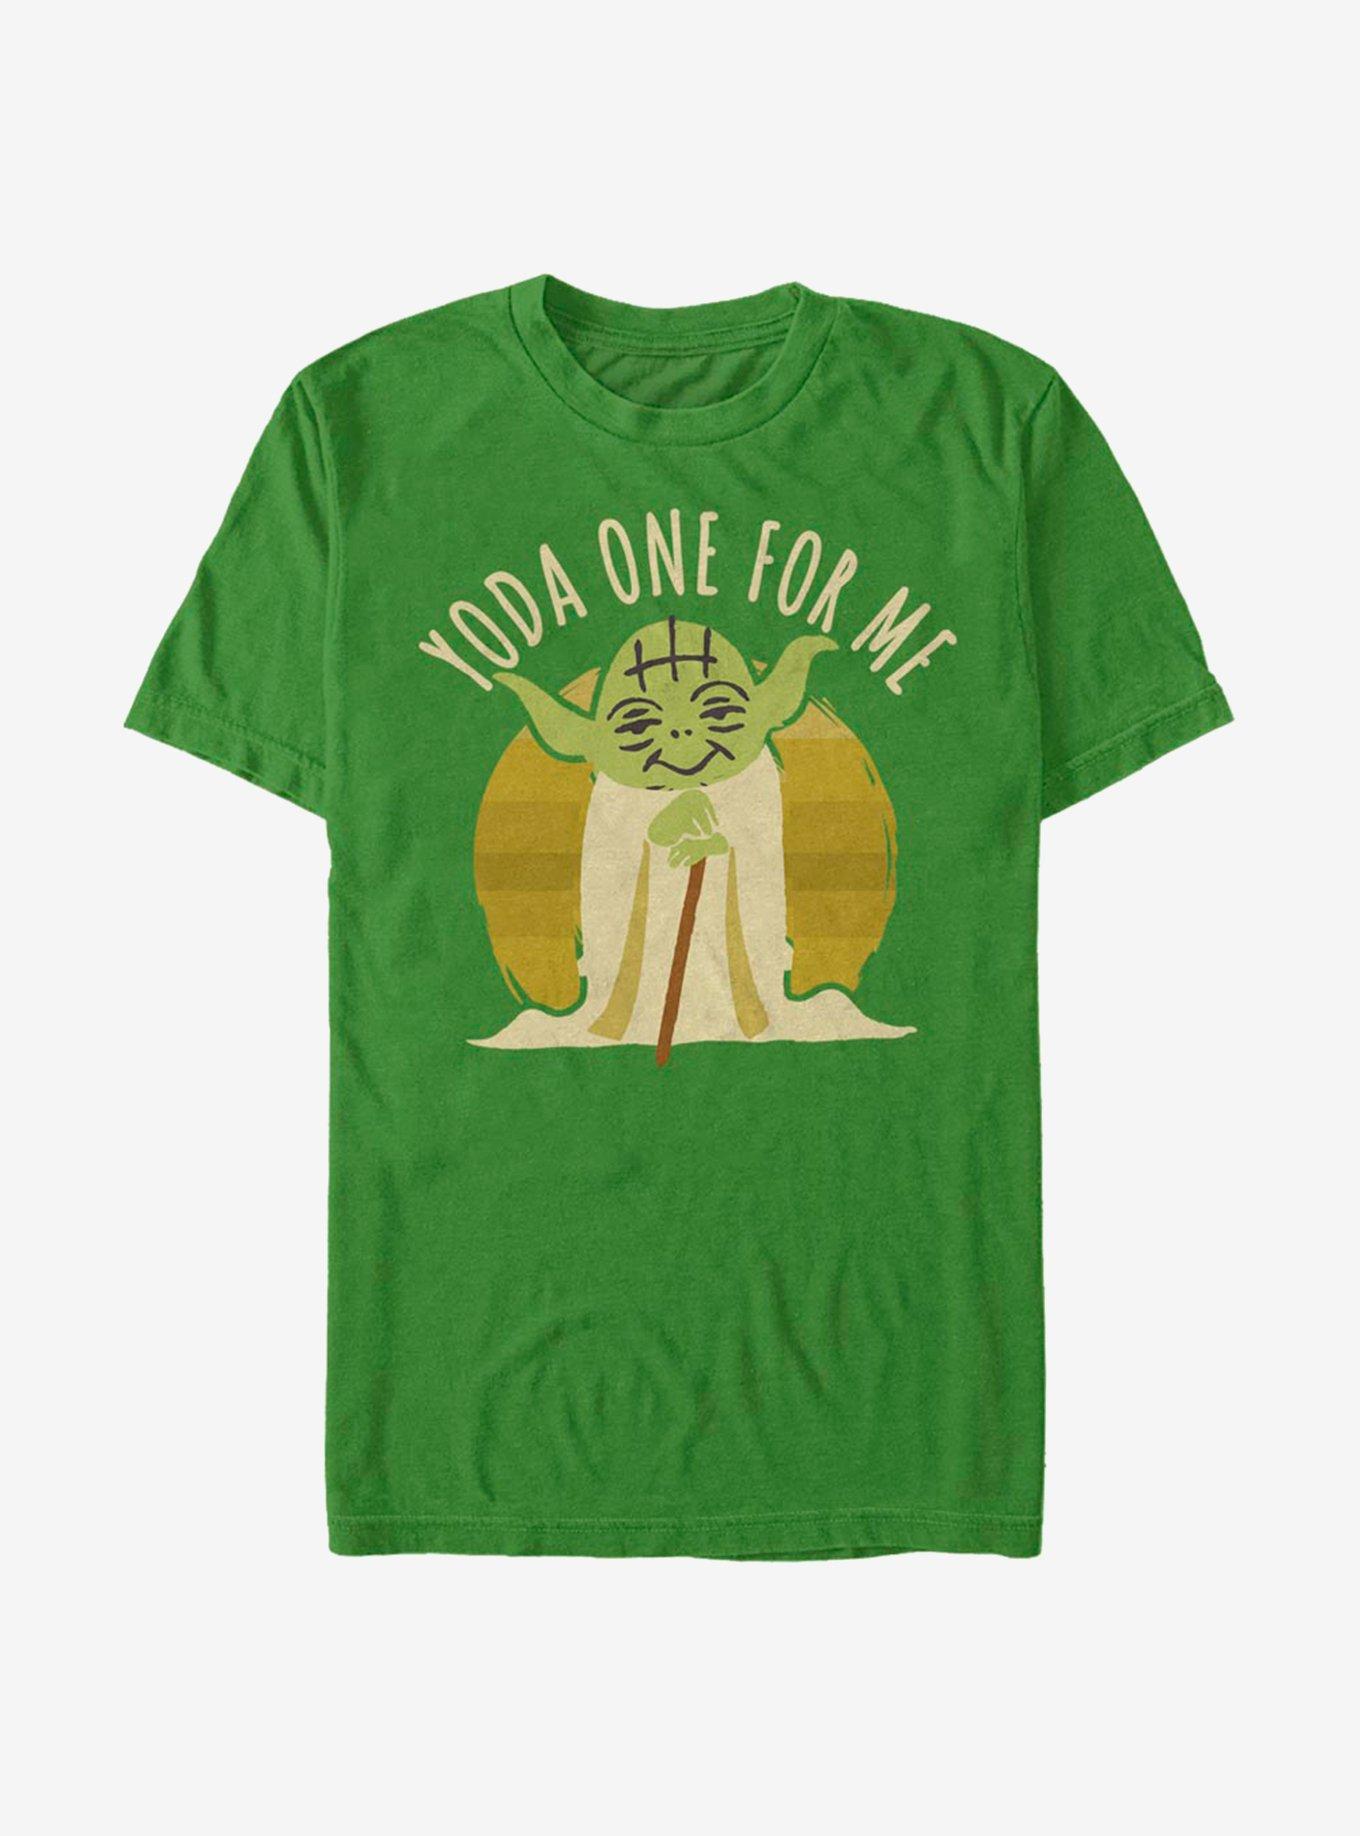 Star Wars Yoda One For Me Circle T-Shirt, KELLY, hi-res